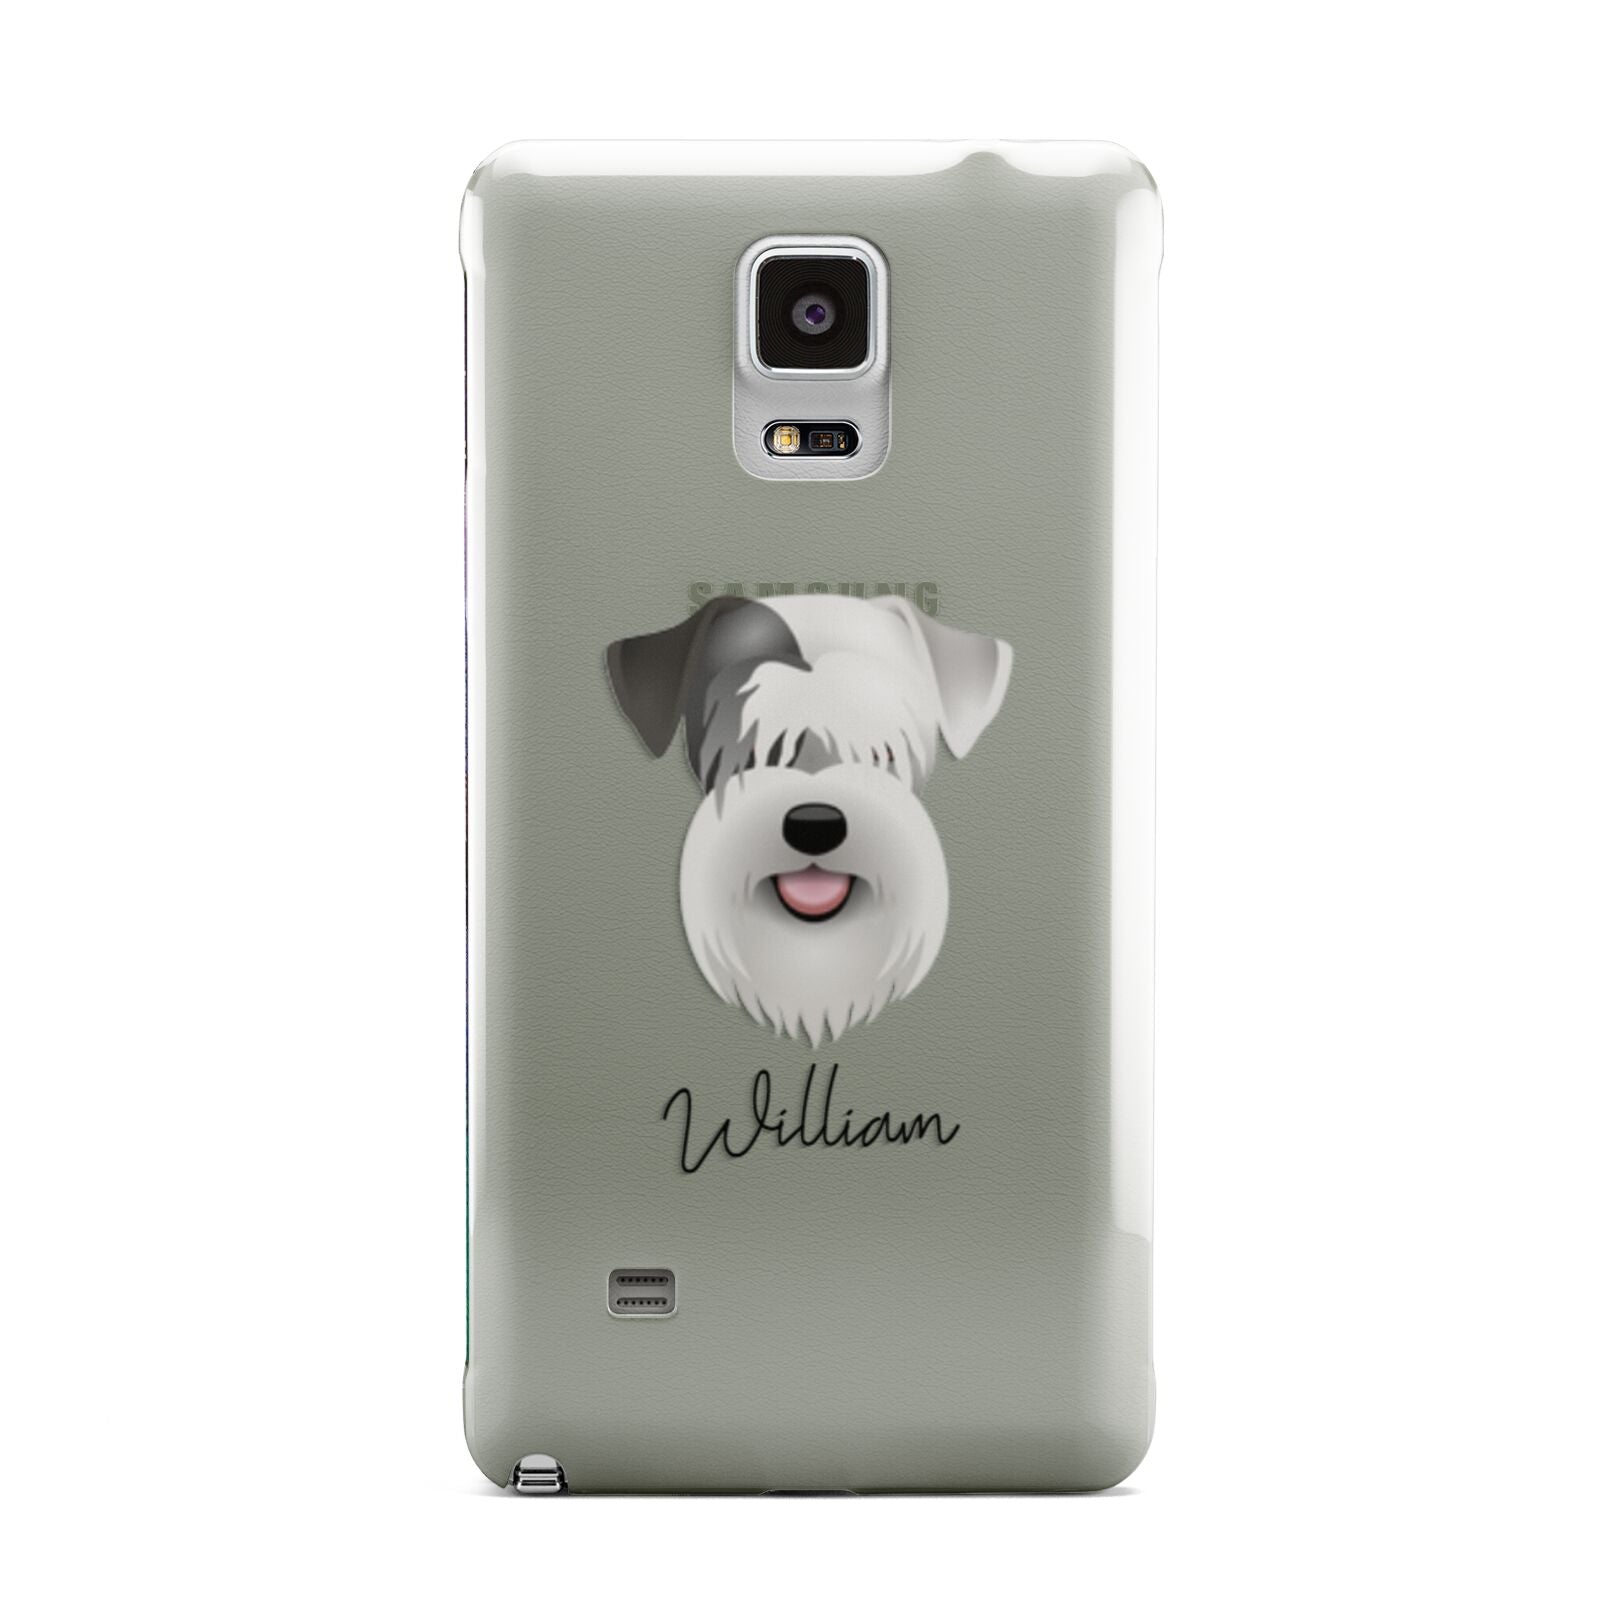 Sealyham Terrier Personalised Samsung Galaxy Note 4 Case